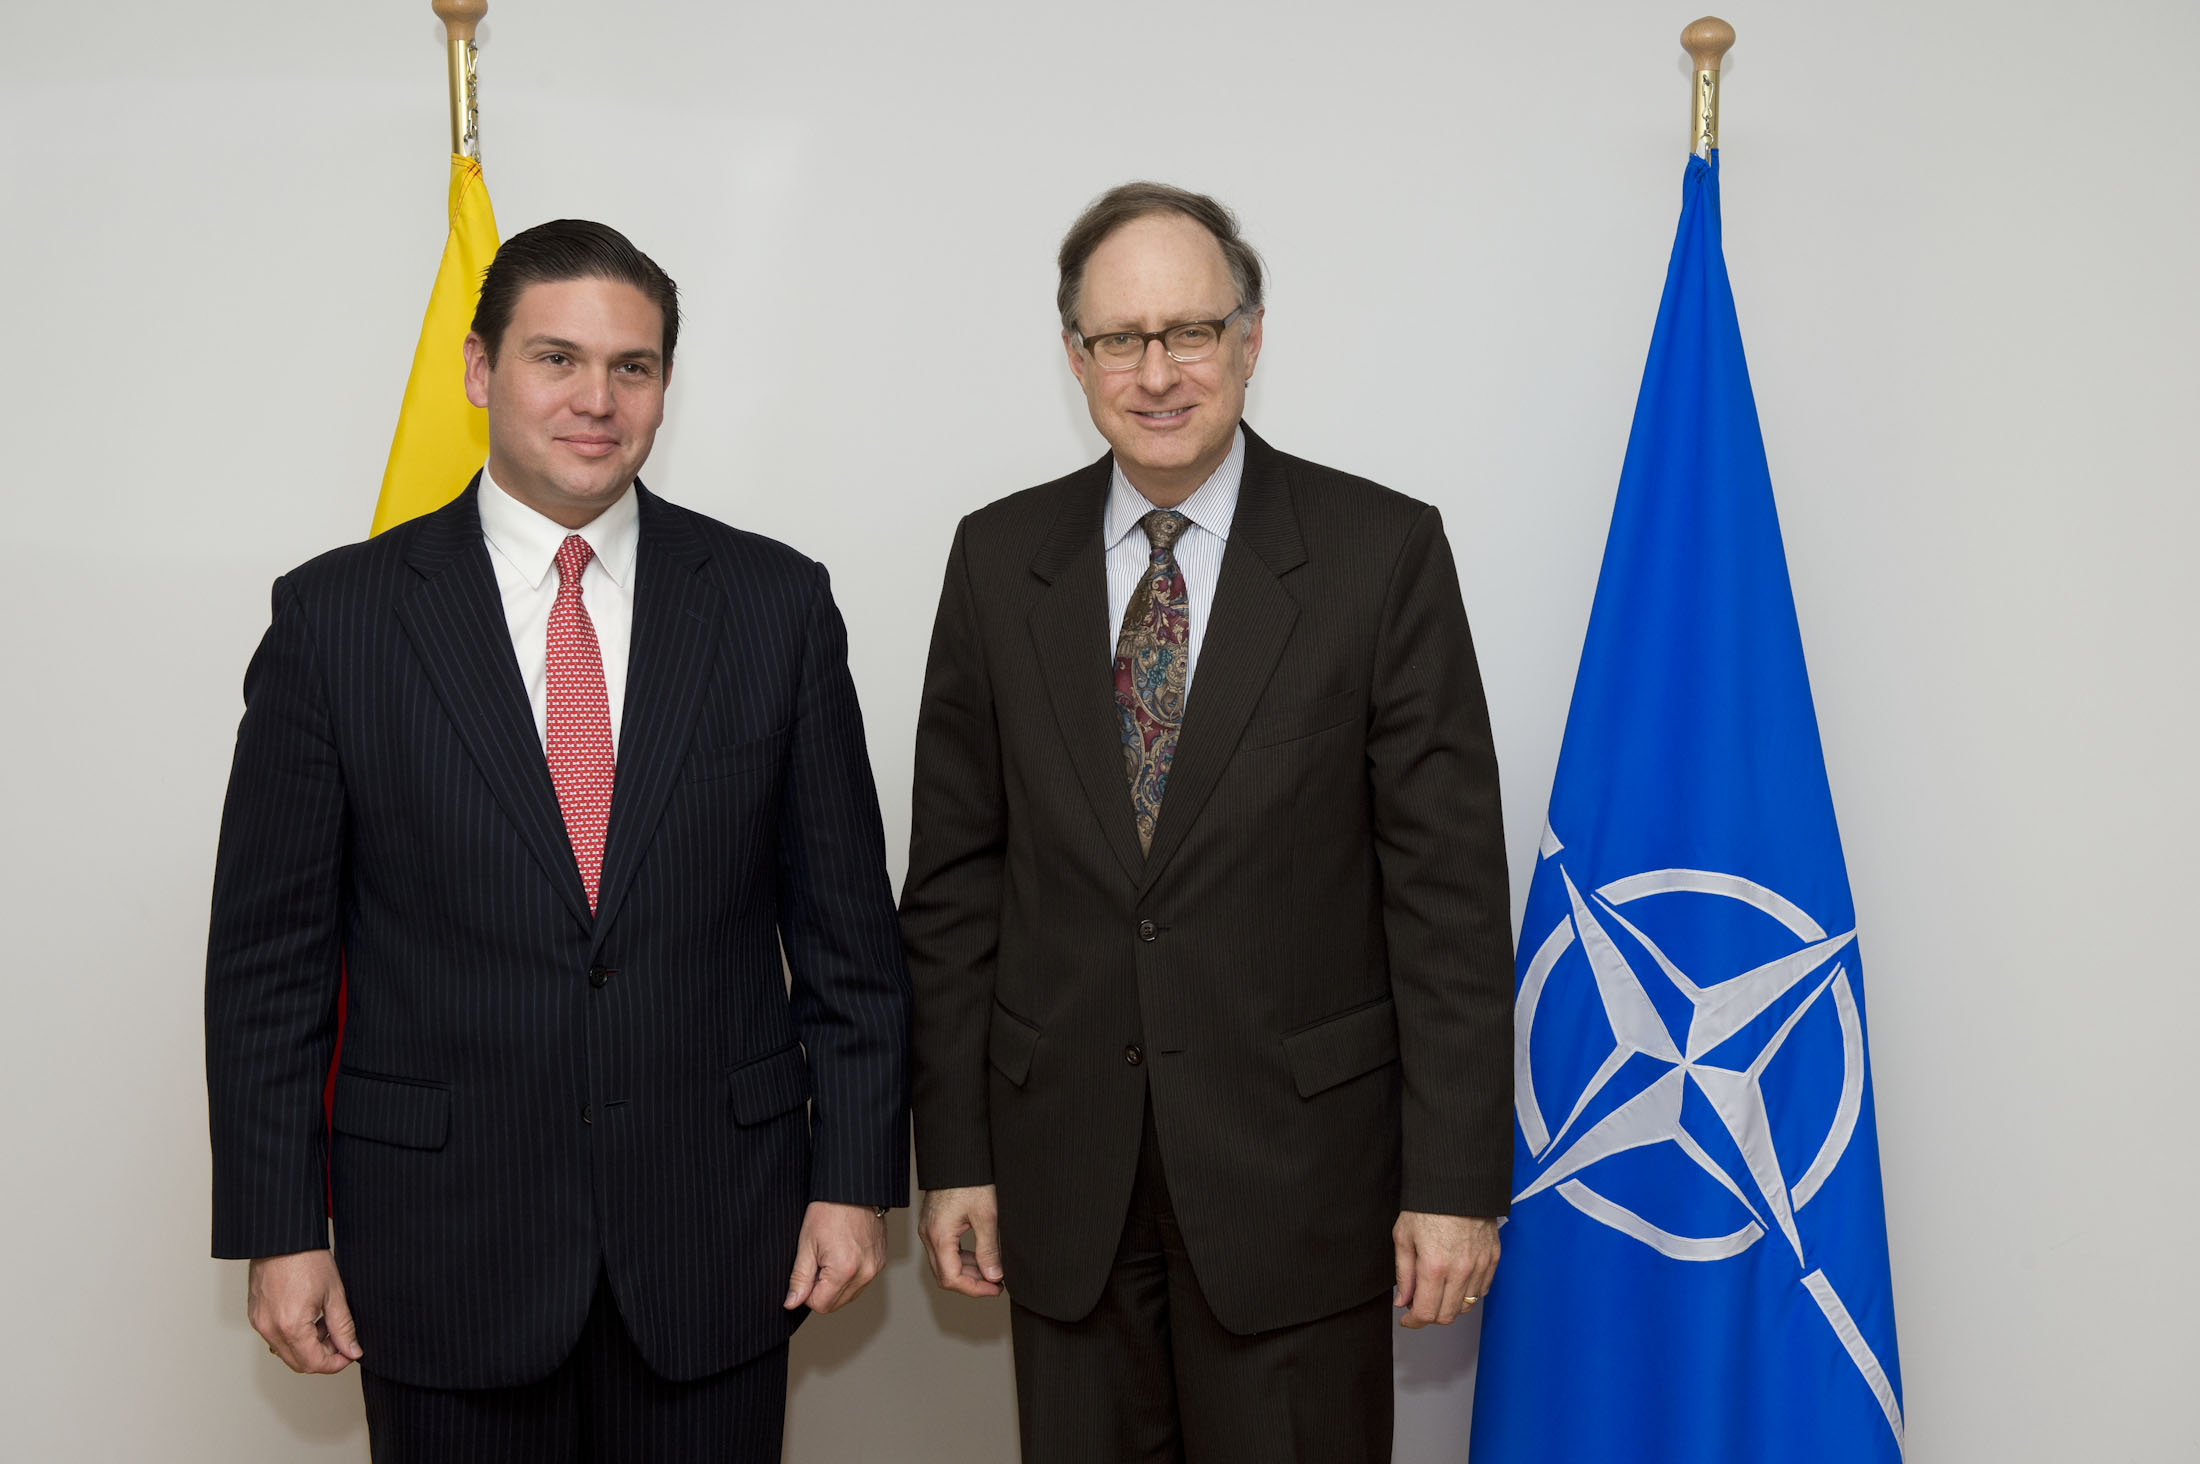 Colombian Minister of Defense Juan Carlos Pinzon and NATO Deputy Secretary General Ambassador Alexander Vershbow, June 25, 2013